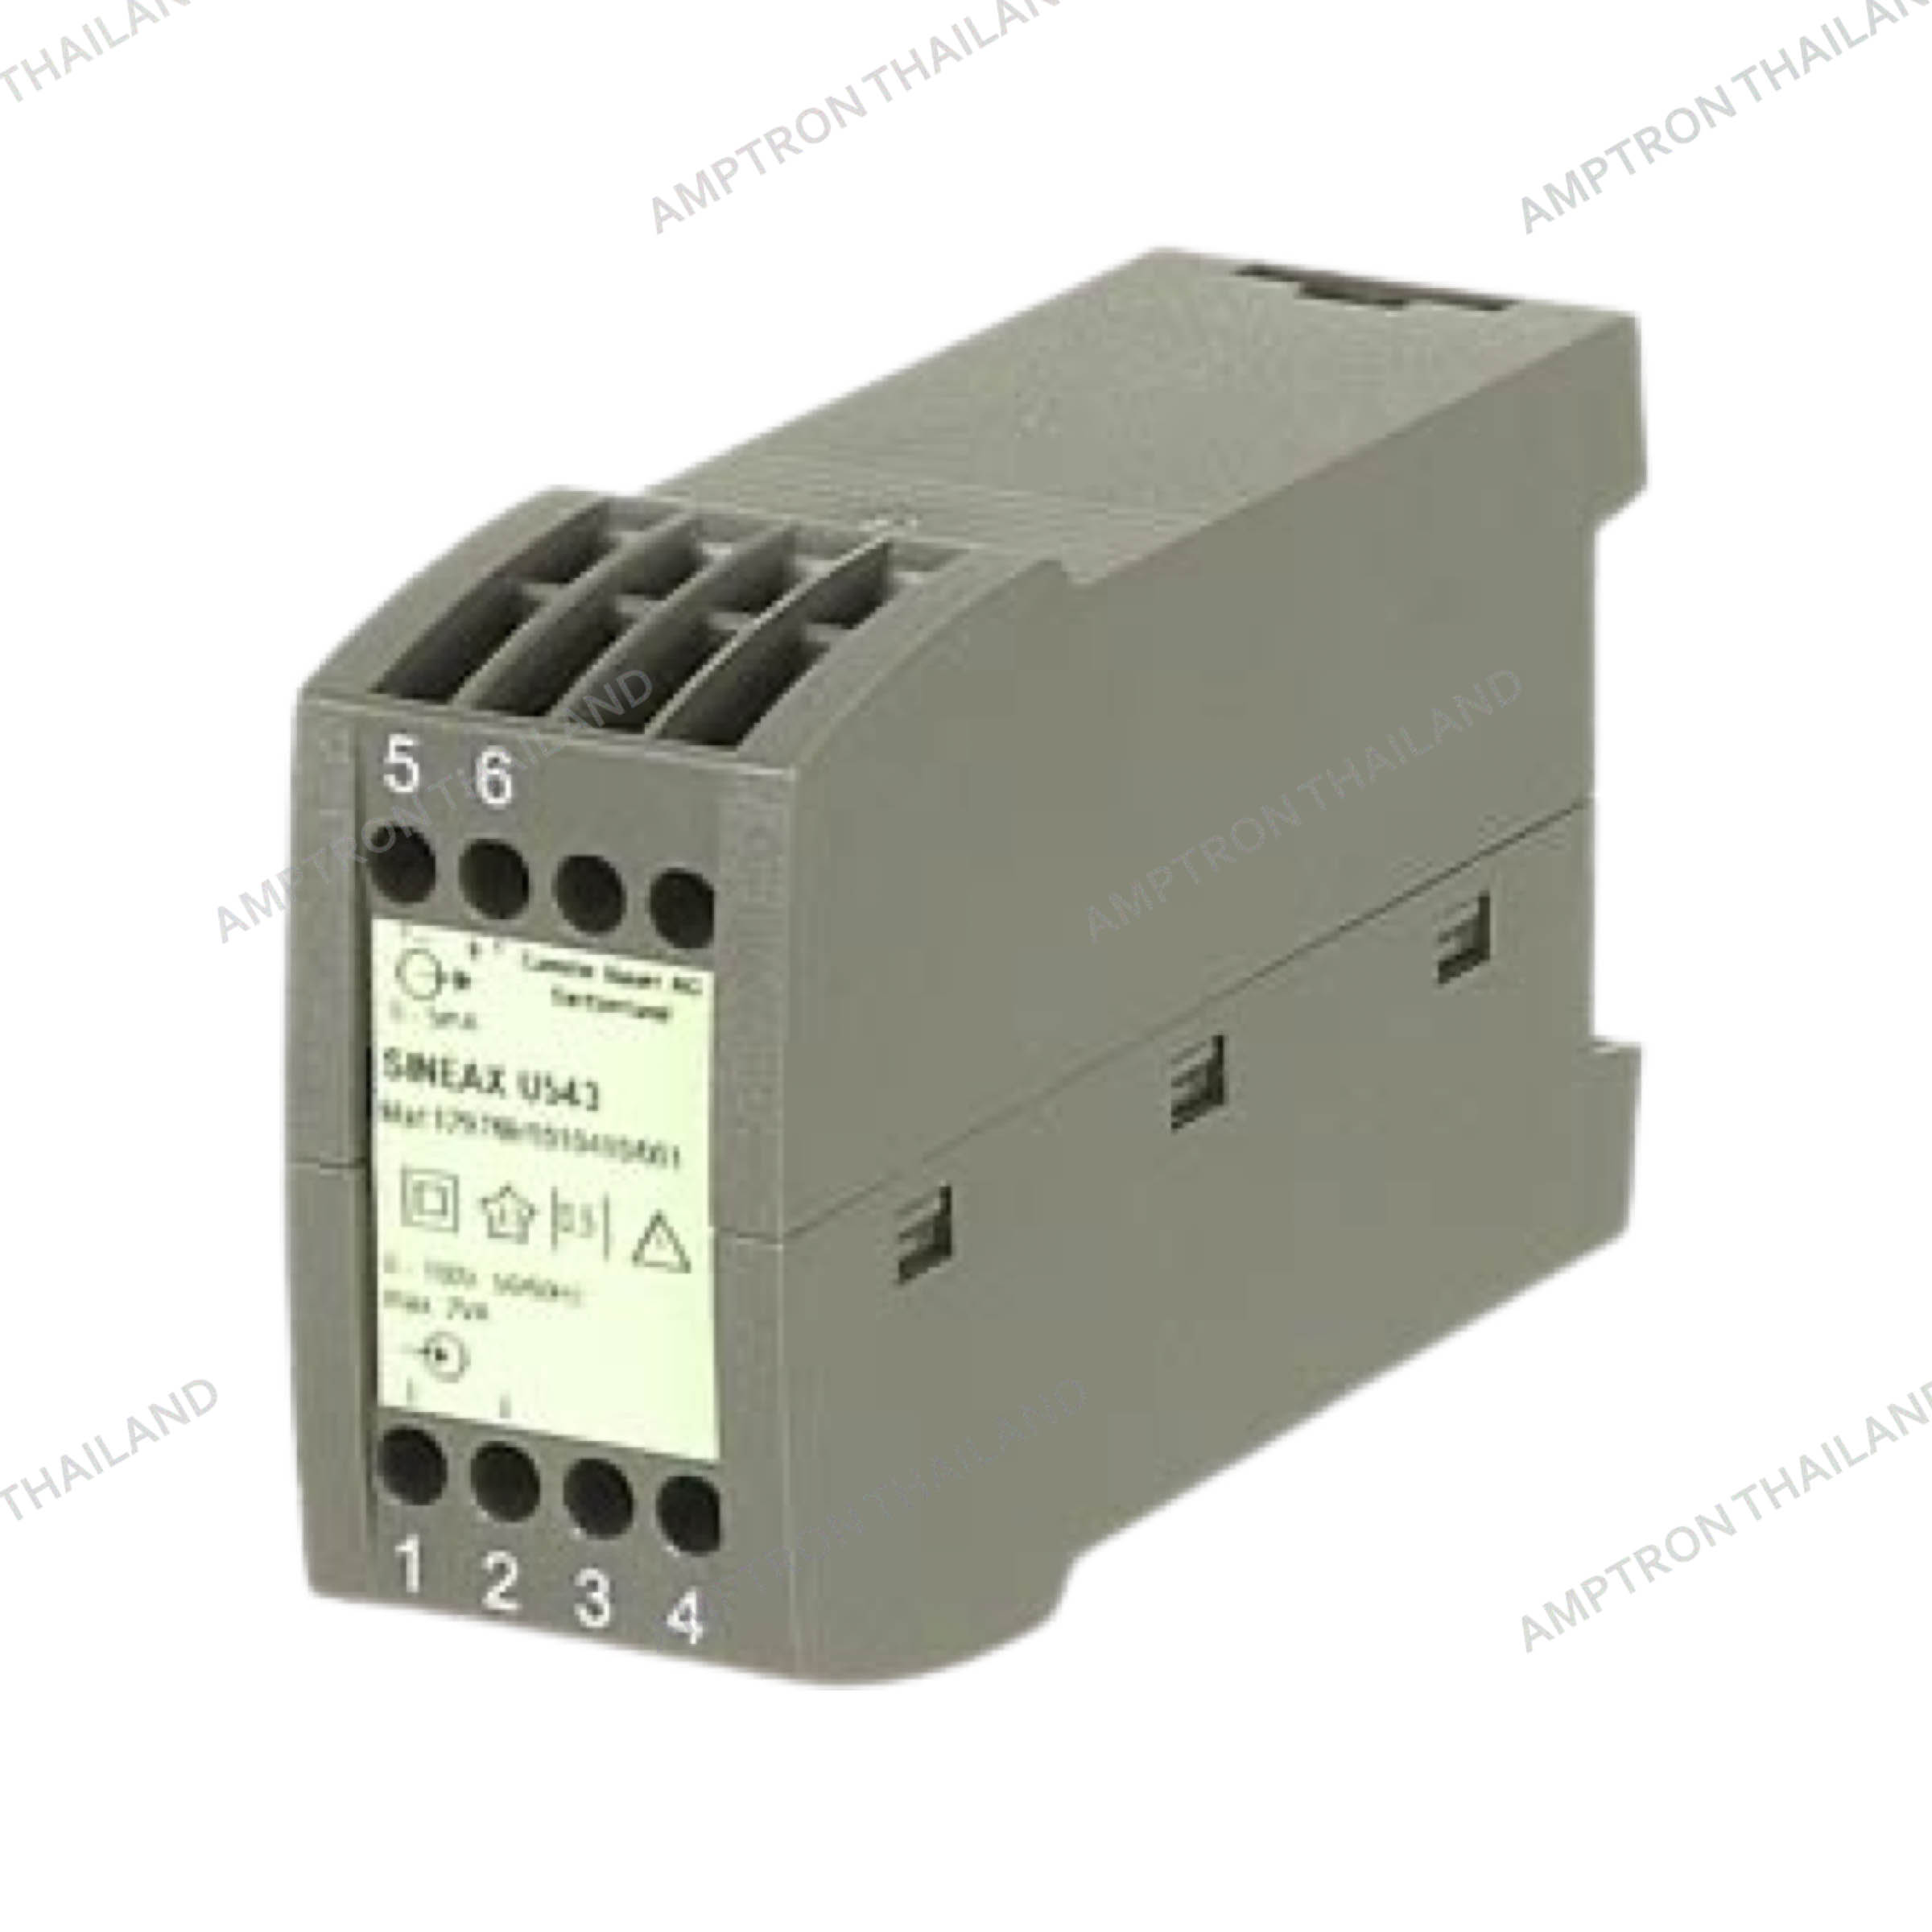 SINEAX U543 Series Transducer